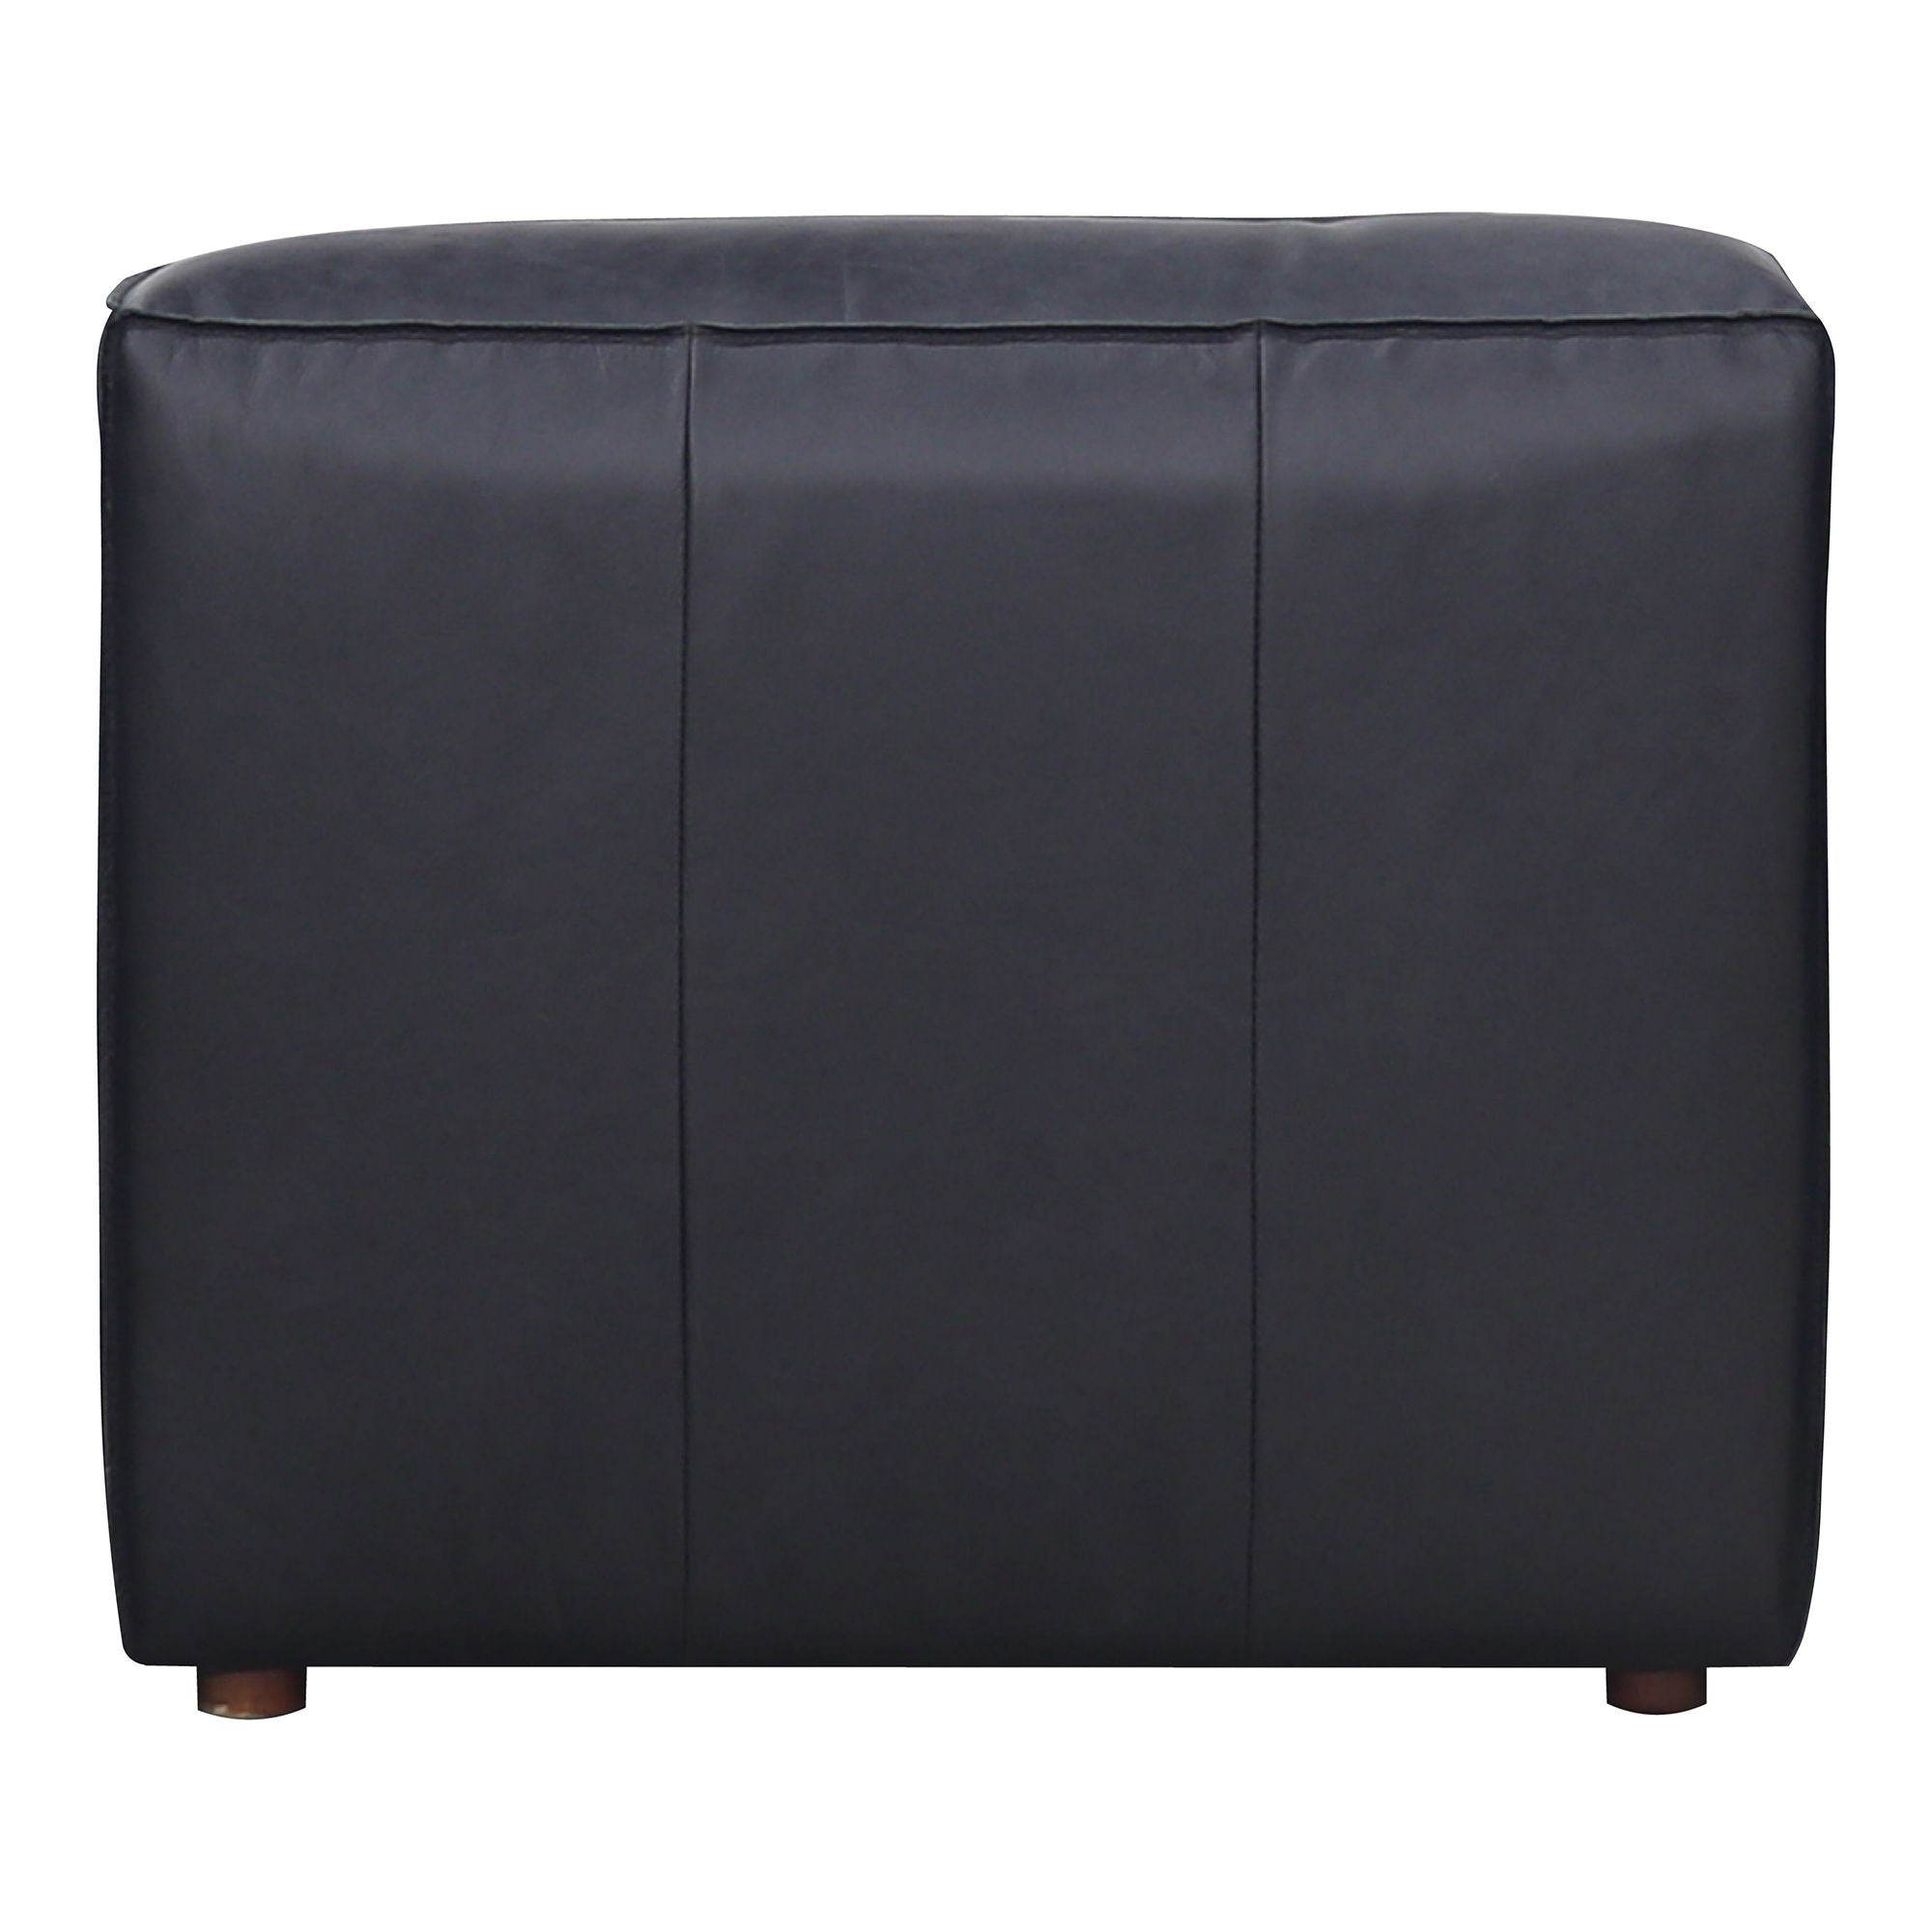 Form - Slipper Chair Vantage Black Leather